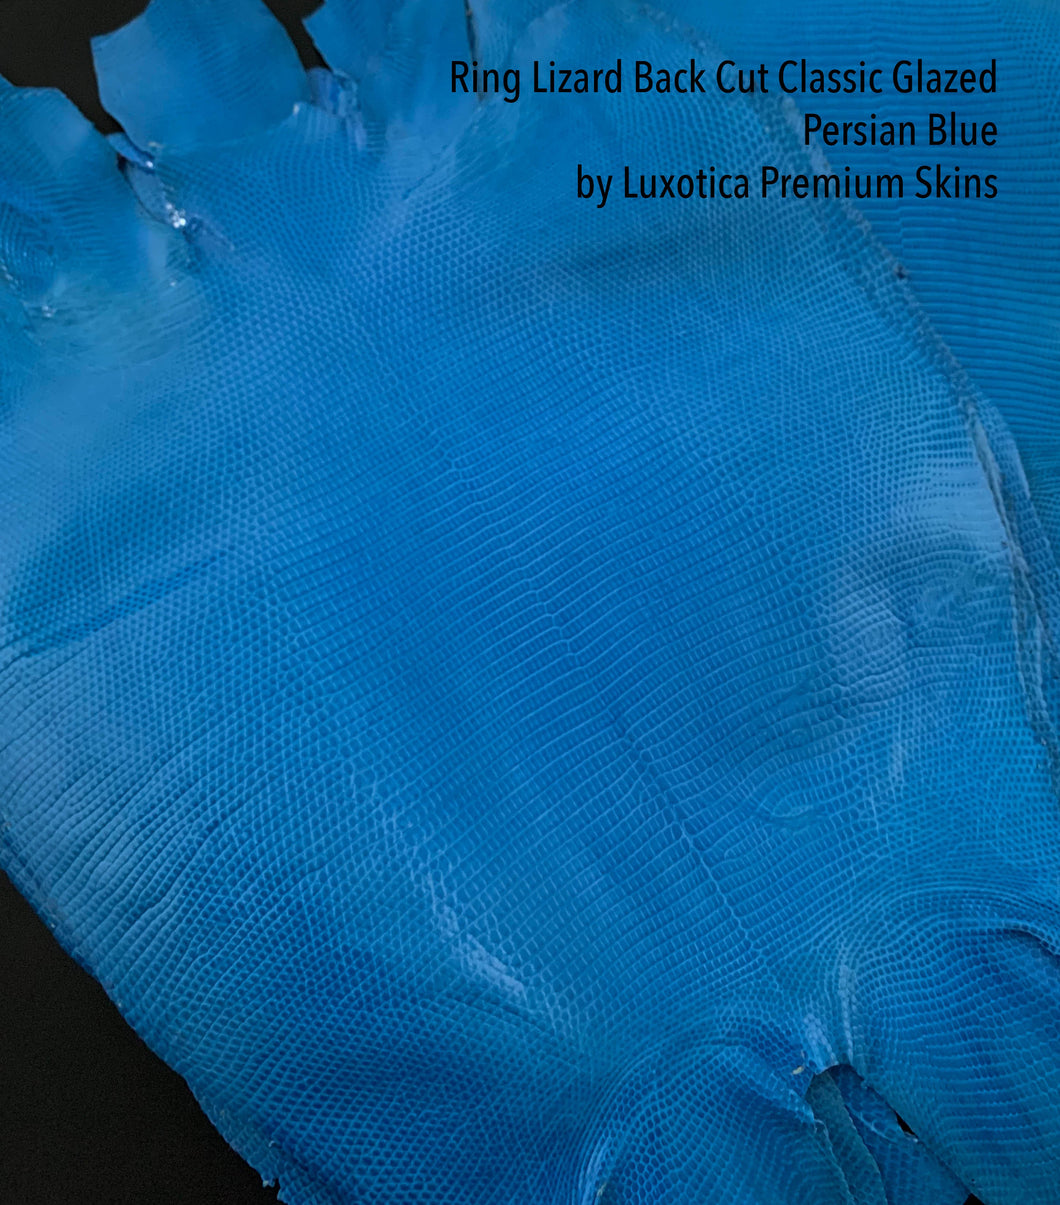 Ring Lizard Back Cut Soft Classic Glazed Persian Blue